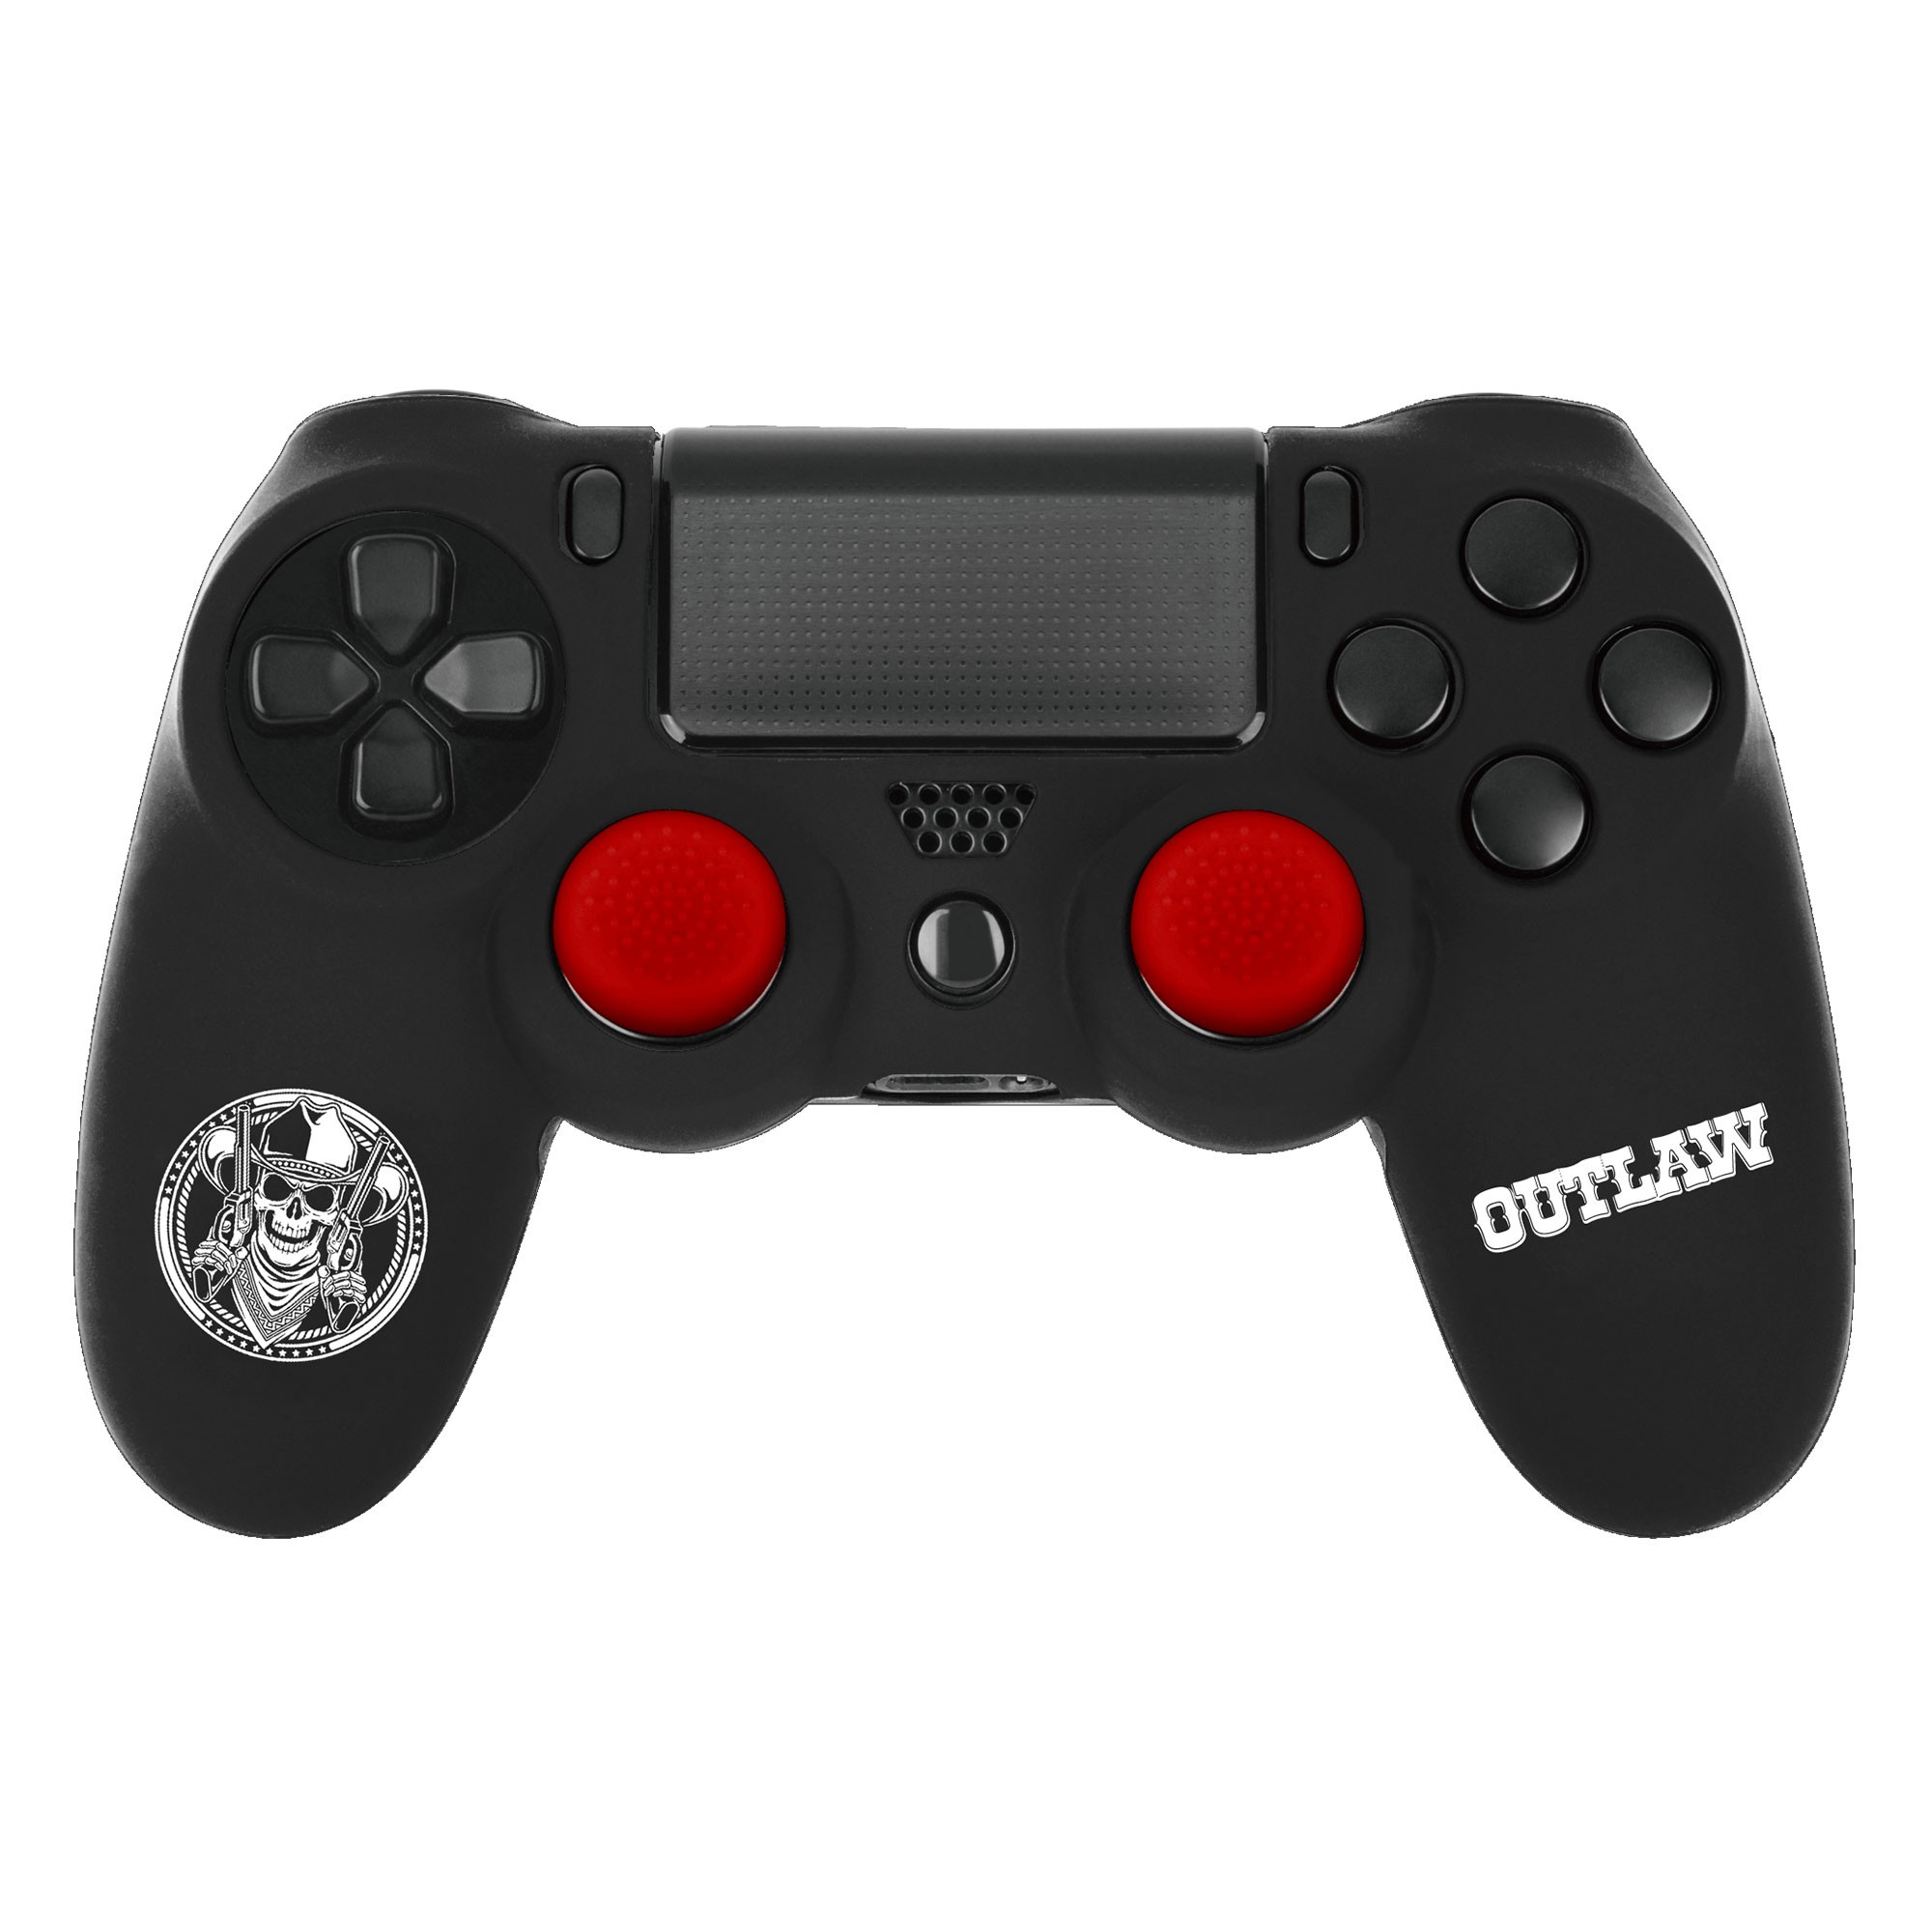 PS4 controller customization kit - Western